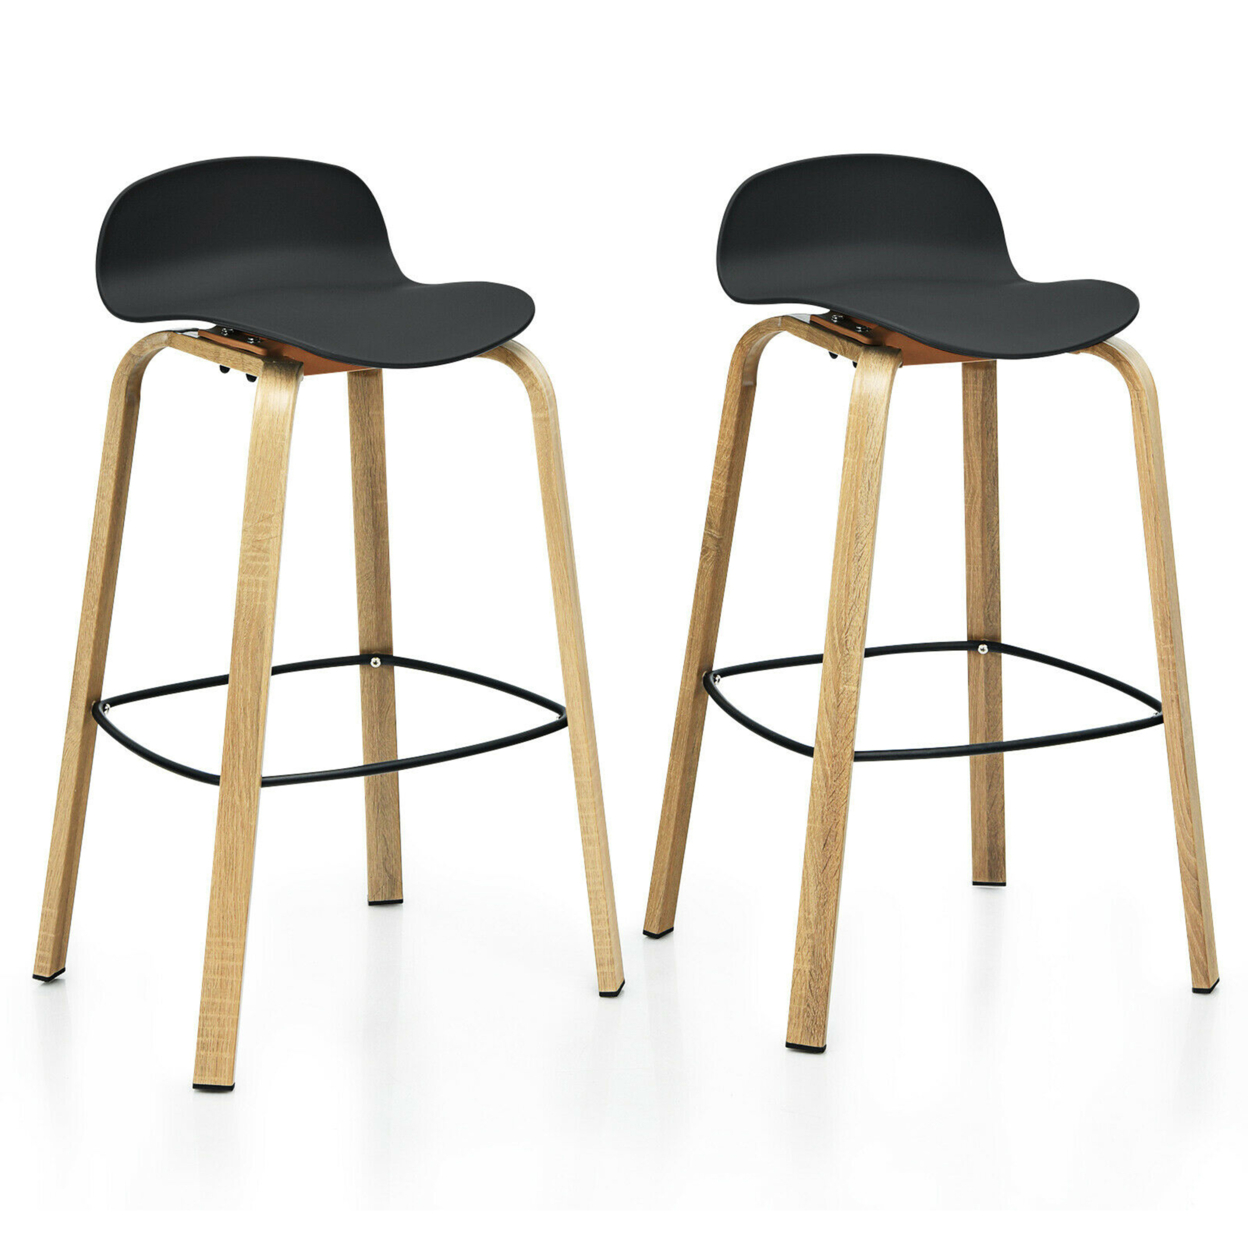 Modern Set Of 2 Barstools 30inch Pub Chairs W/Low Back & Metal Legs Black